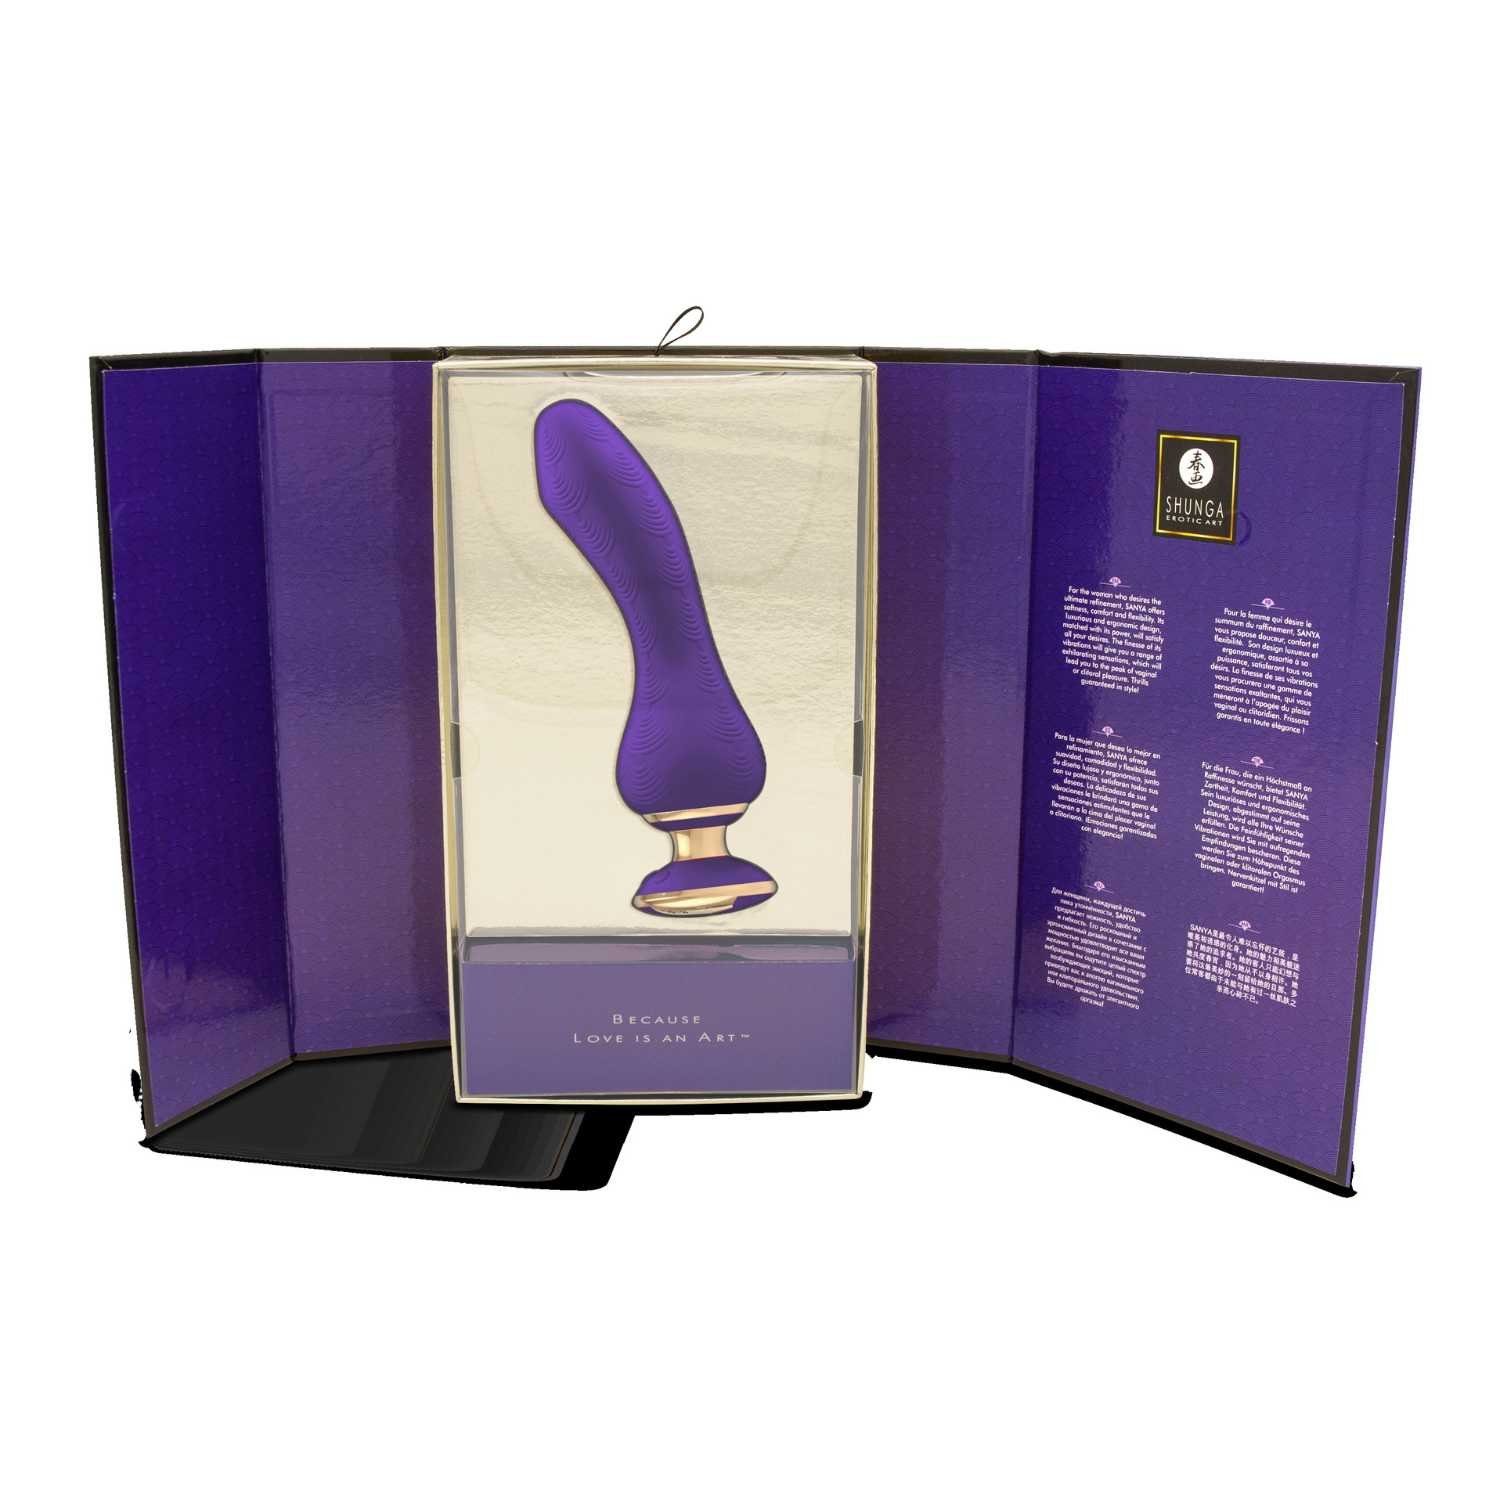 violett Vibrator Shunga klassischer Sanya Vibrator Shunga Toys